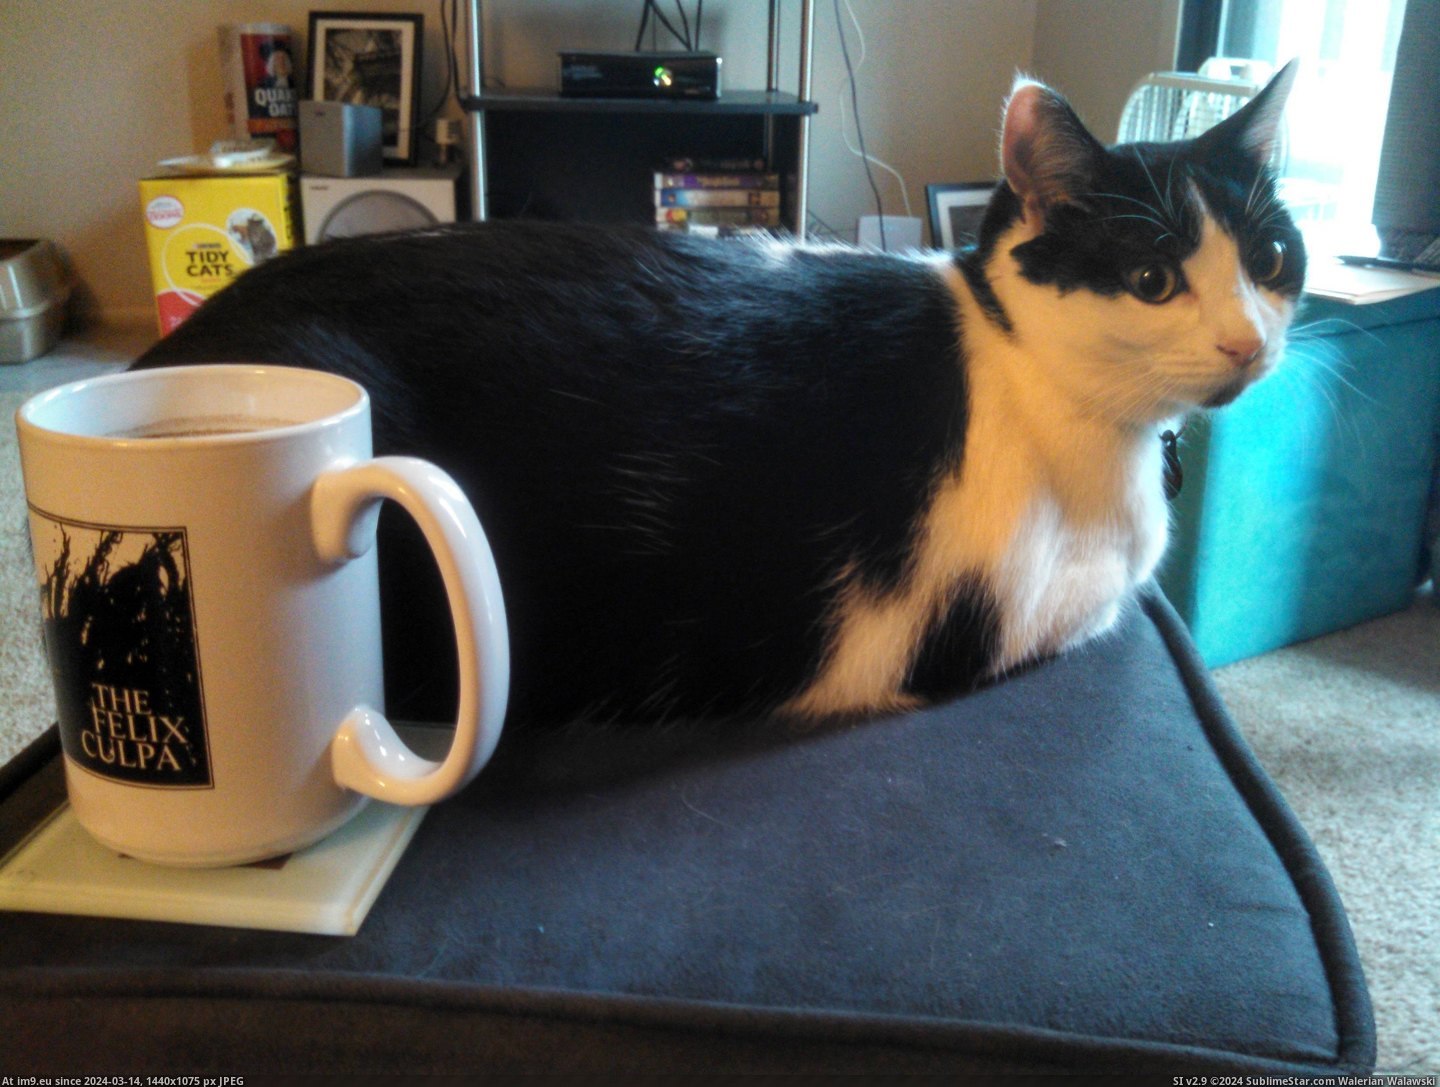 #Cats #Coffee #Buttwarmer #Calls #Zoey [Cats] I call it coffee, Zoey calls it a buttwarmer. Pic. (Image of album My r/CATS favs))